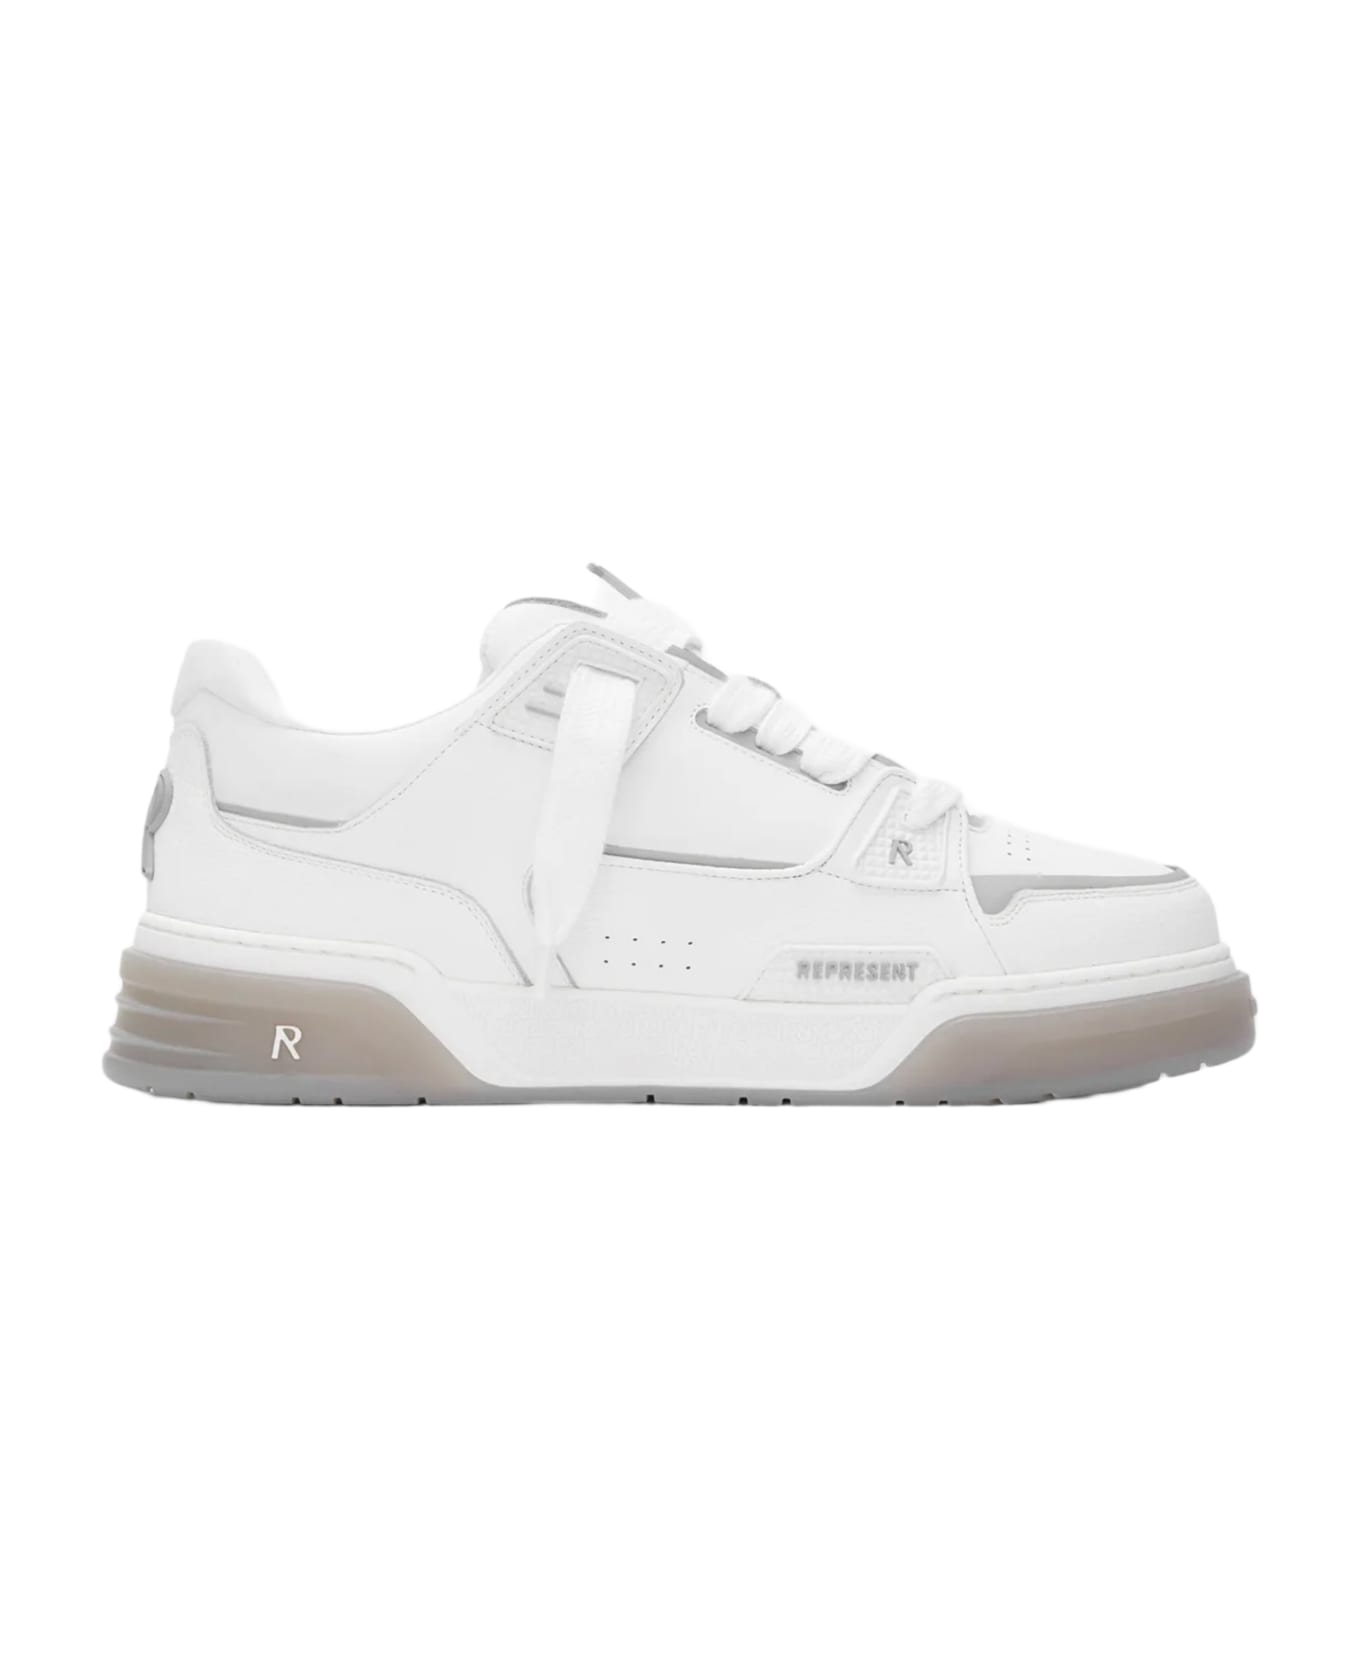 REPRESENT Studio Sneaker White leather low chunky sneaker - Studio sneaker - Bianco/grigio